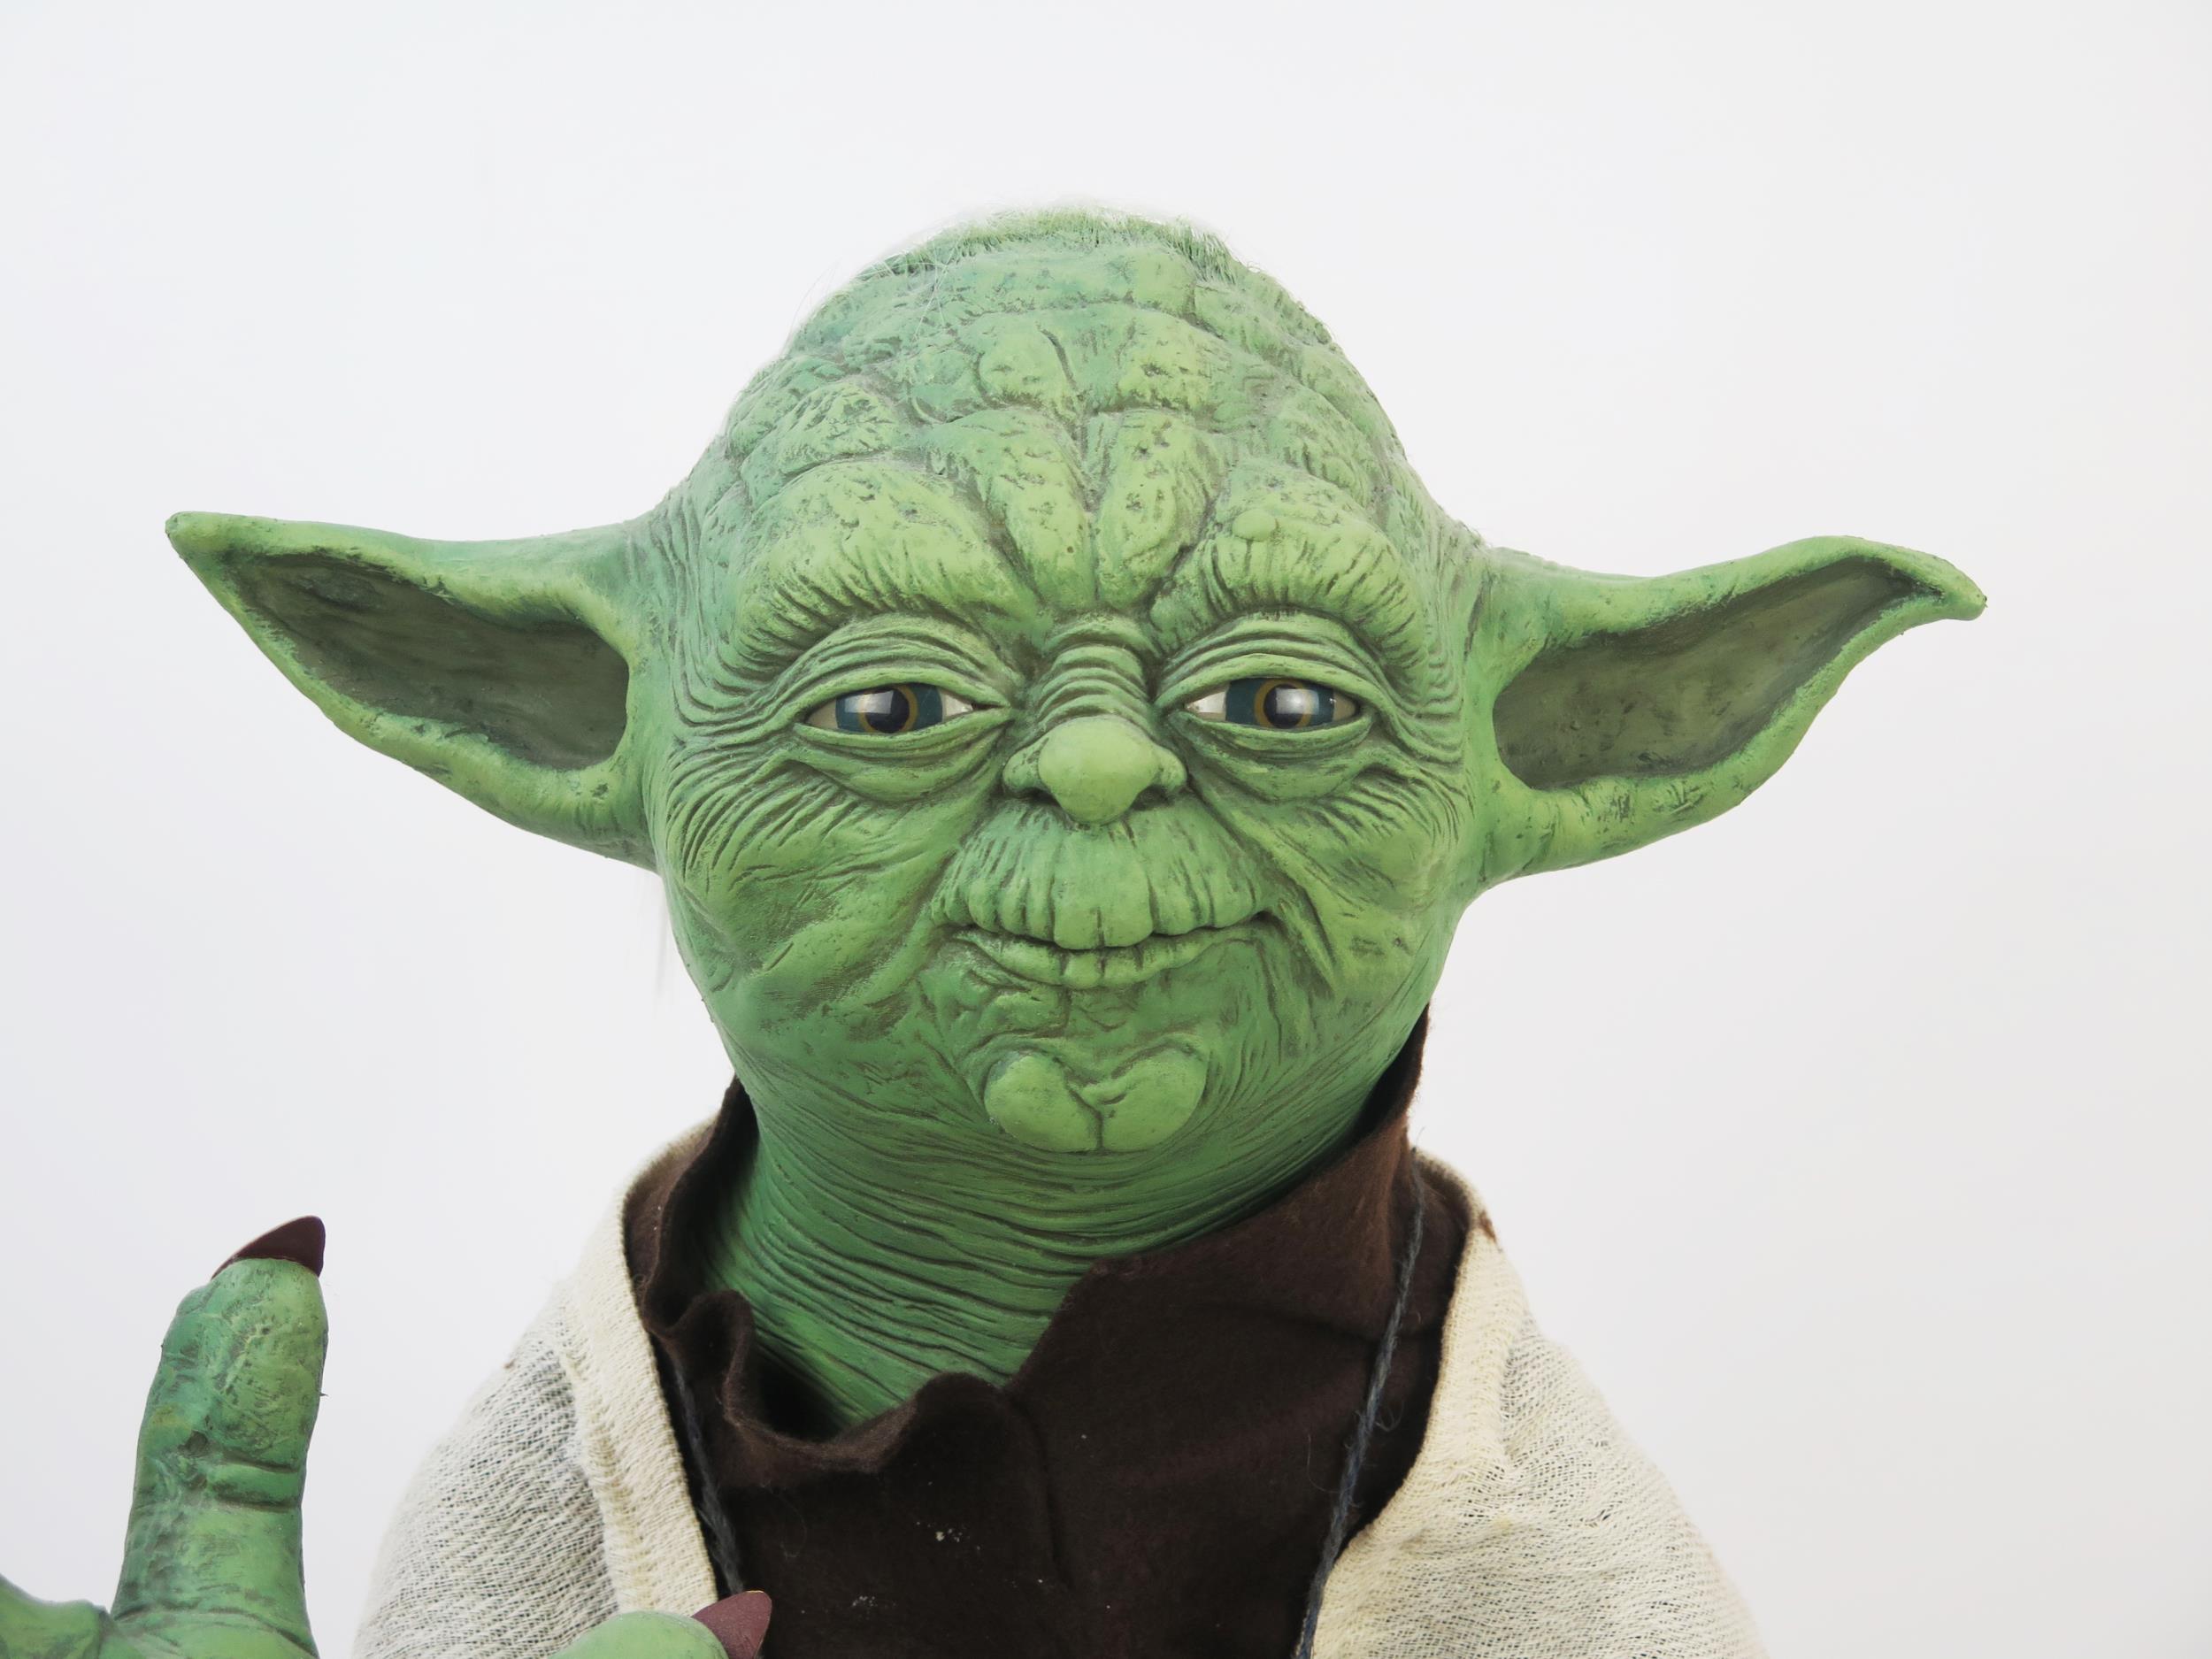 Life Size Yoda from Star Wars model replica film prop made from foam rubber, 27"/69cm tall - Bild 2 aus 5